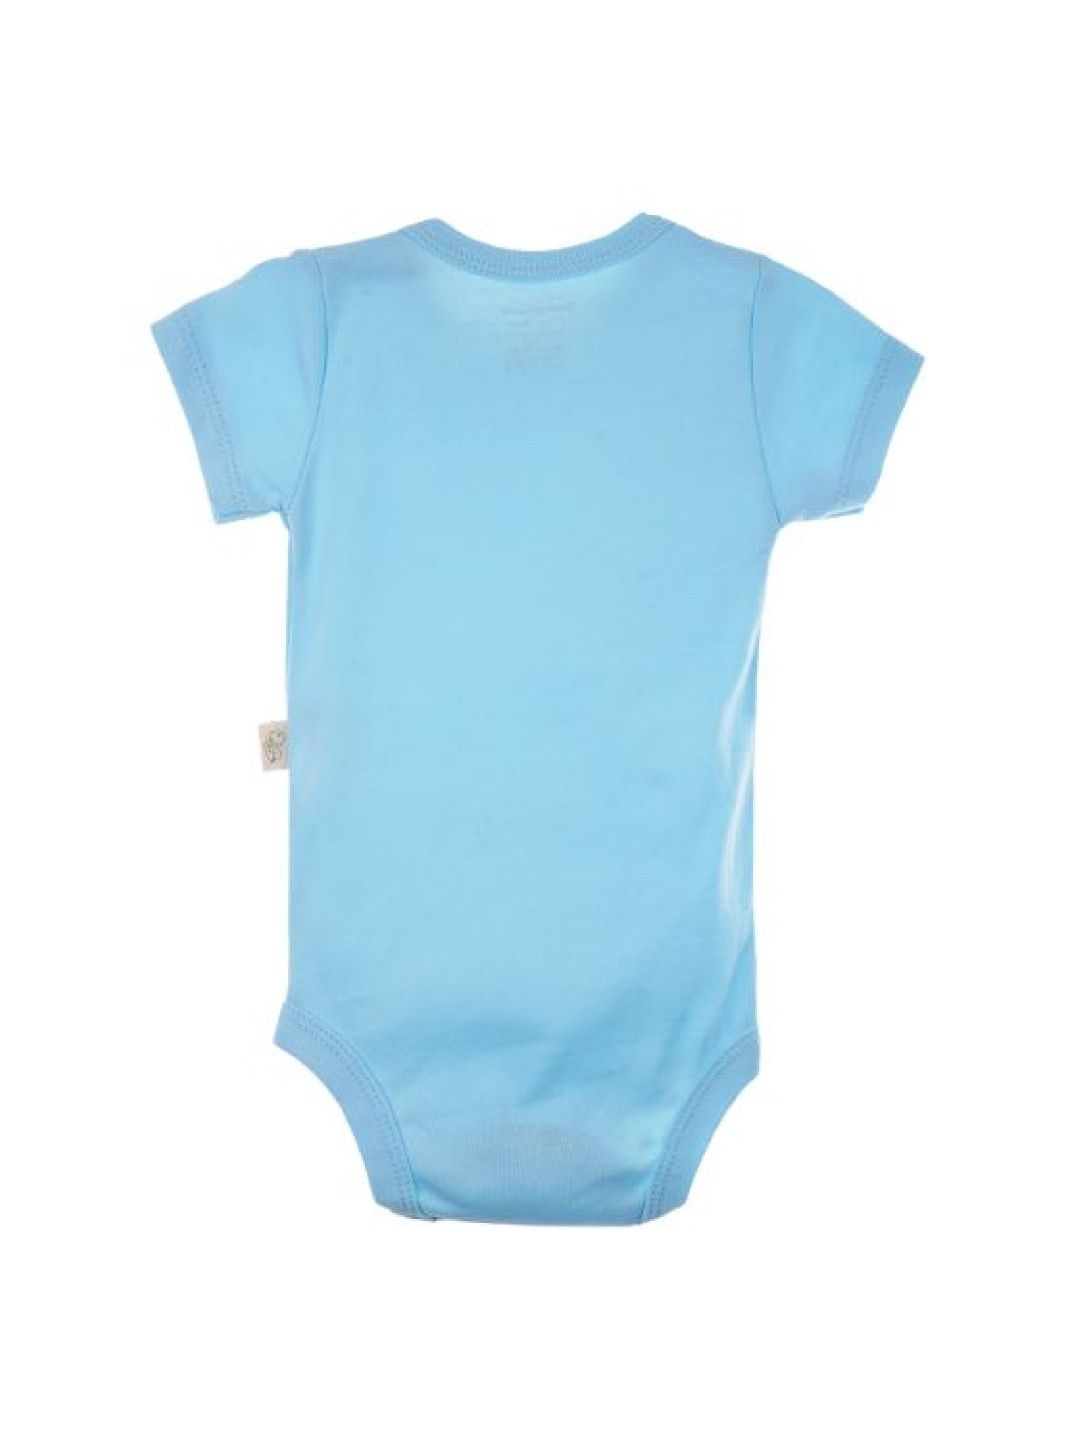 bean fashion Babycosy Organic Short Sleeved Body (Sky Blue- Image 2)